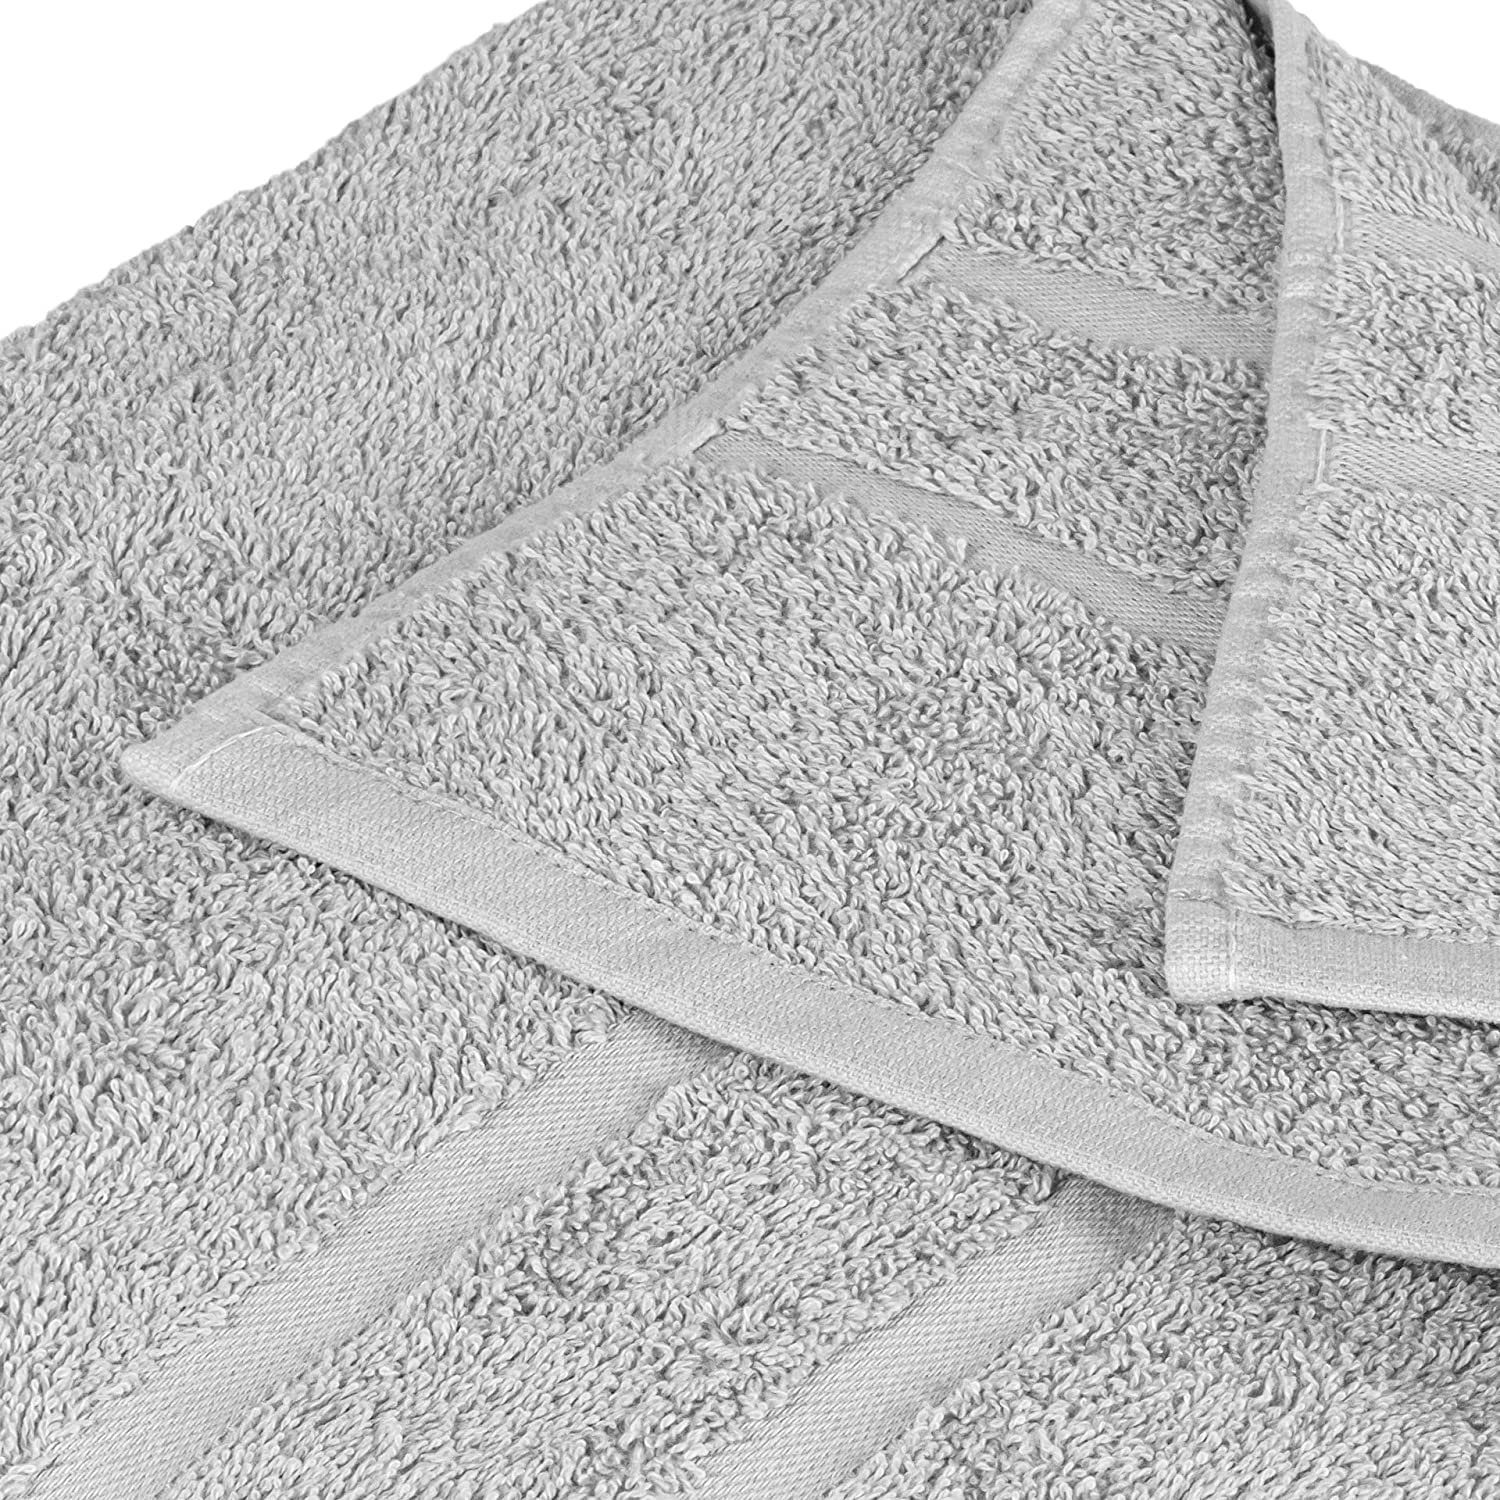 StickandShine Handtuch Handtücher Badetücher Saunatücher Baumwolle Duschtücher Wahl 100% GSM Gästehandtücher 500 in zur Hellgrau